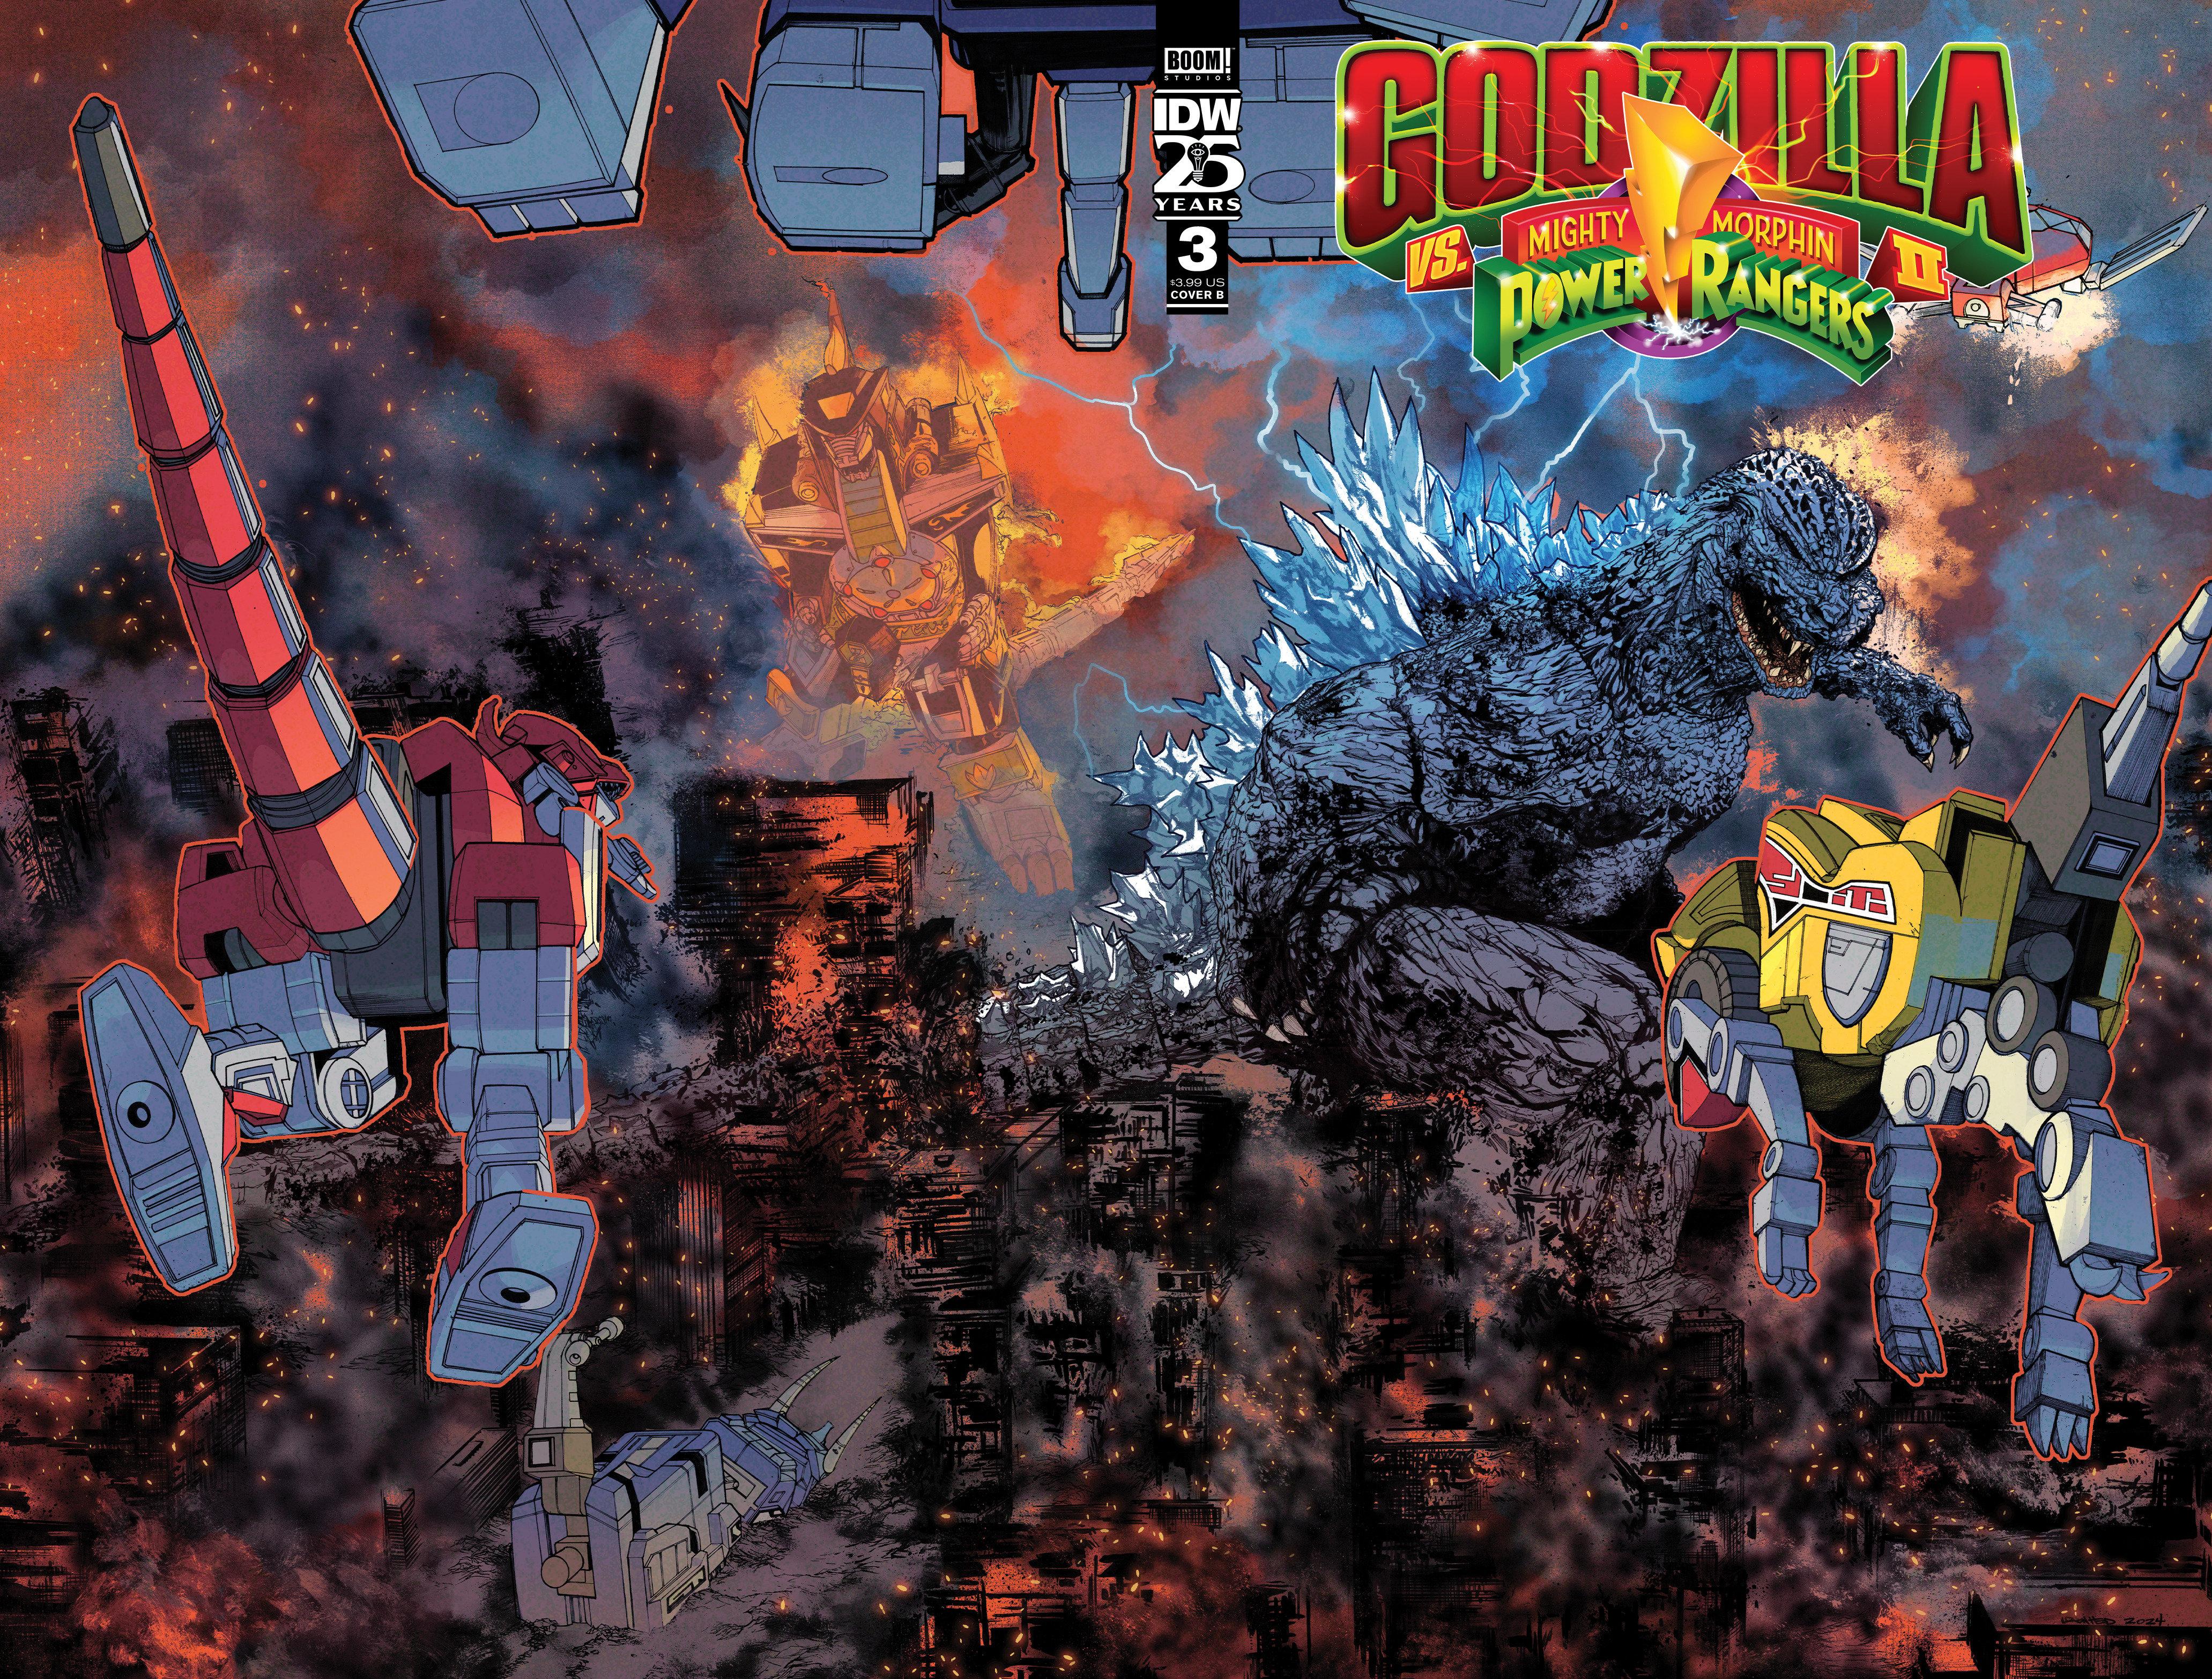 Godzilla Vs. The Mighty Morphin Power Rangers II #3 Cover B Sanchez